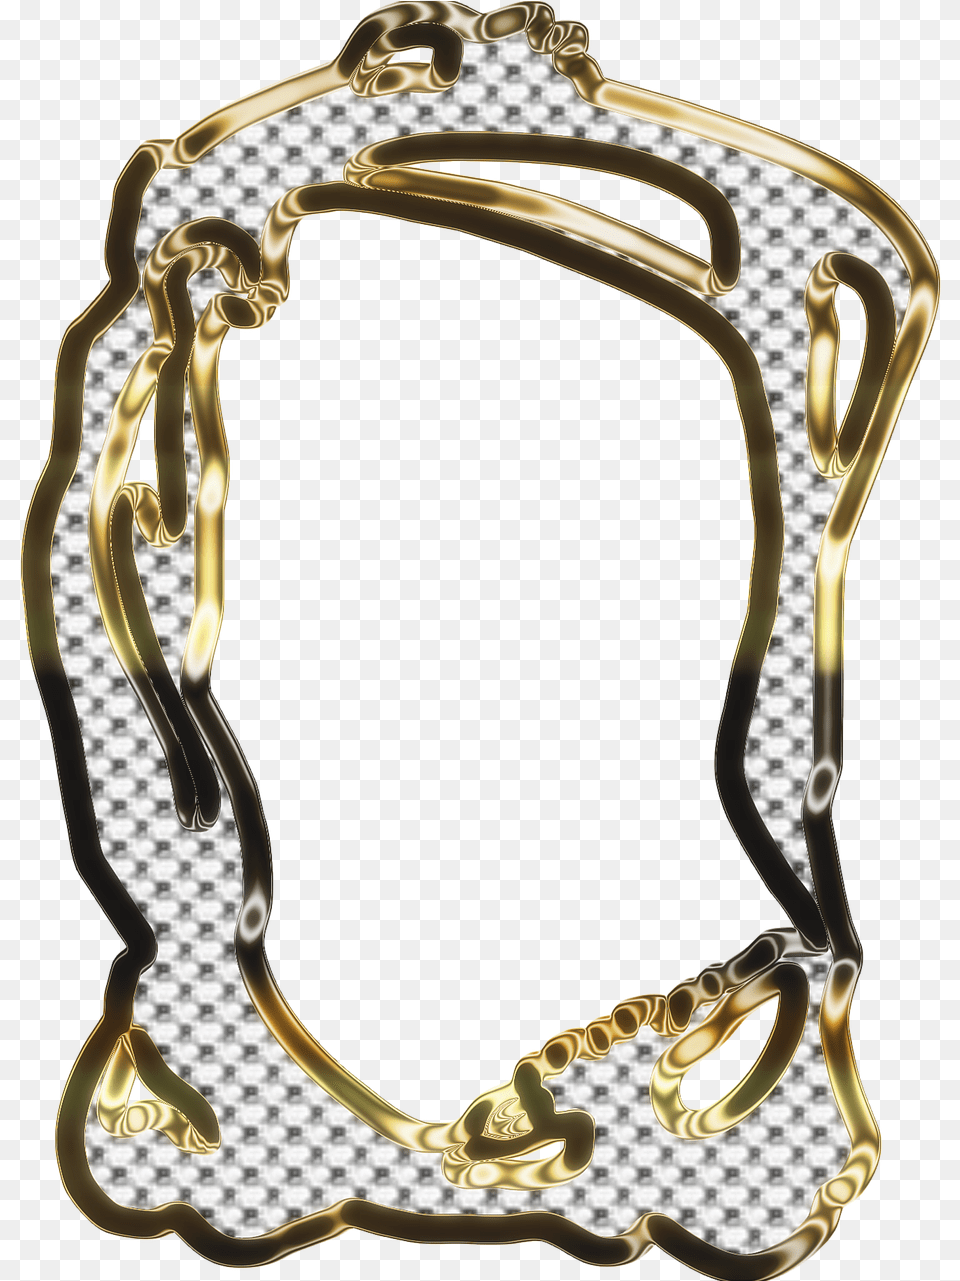 Diamonds Glitter Gold Free On Pixabay Solid, Accessories, Bracelet, Jewelry, Diamond Png